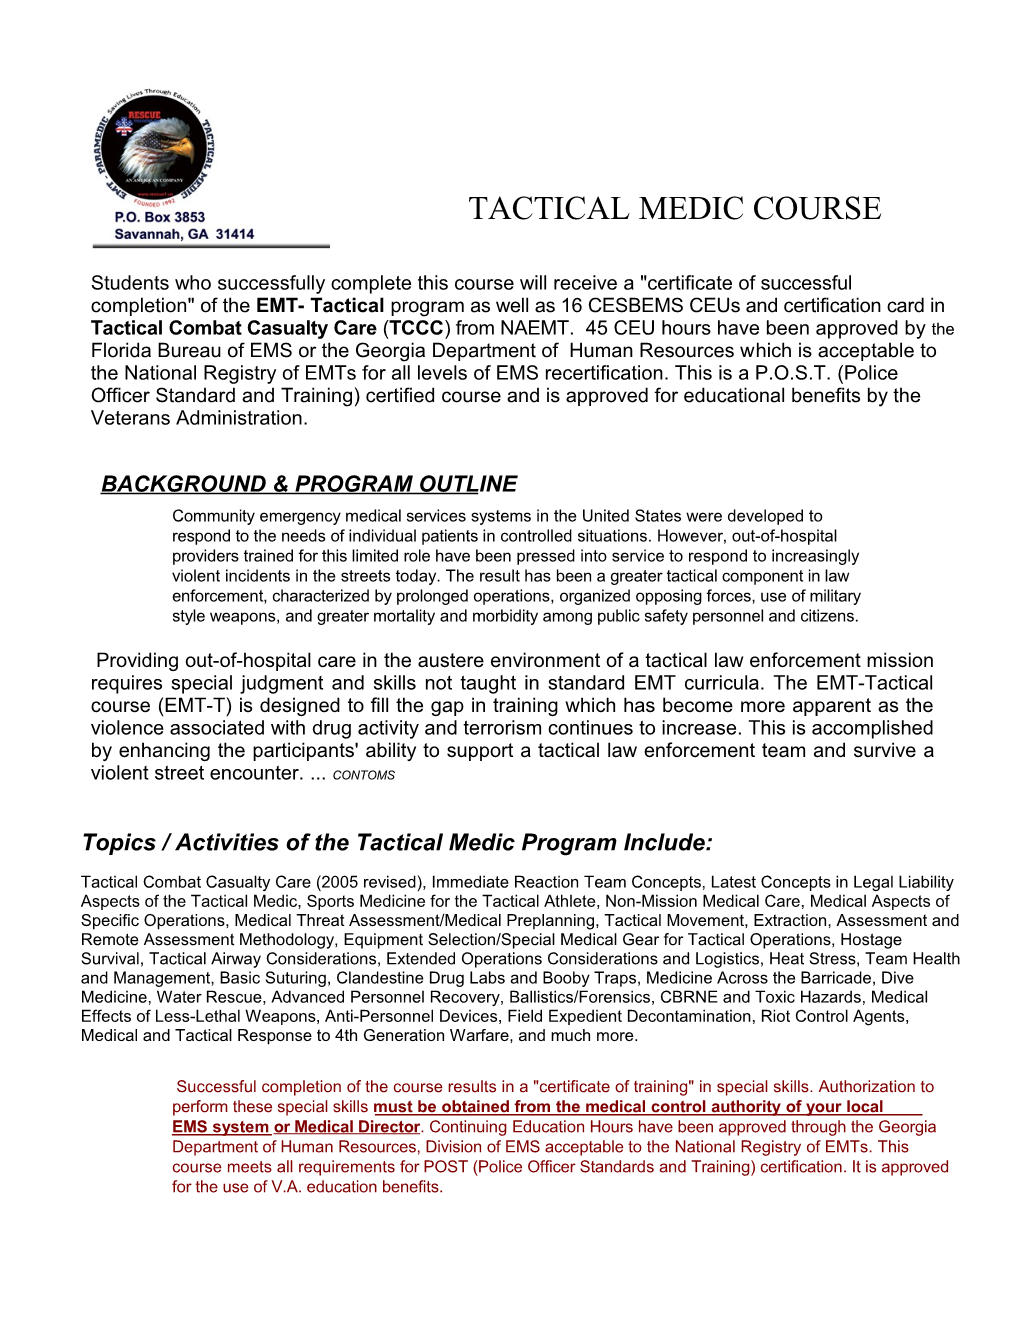 Topics / Activities of the Tactical Medic Program Include